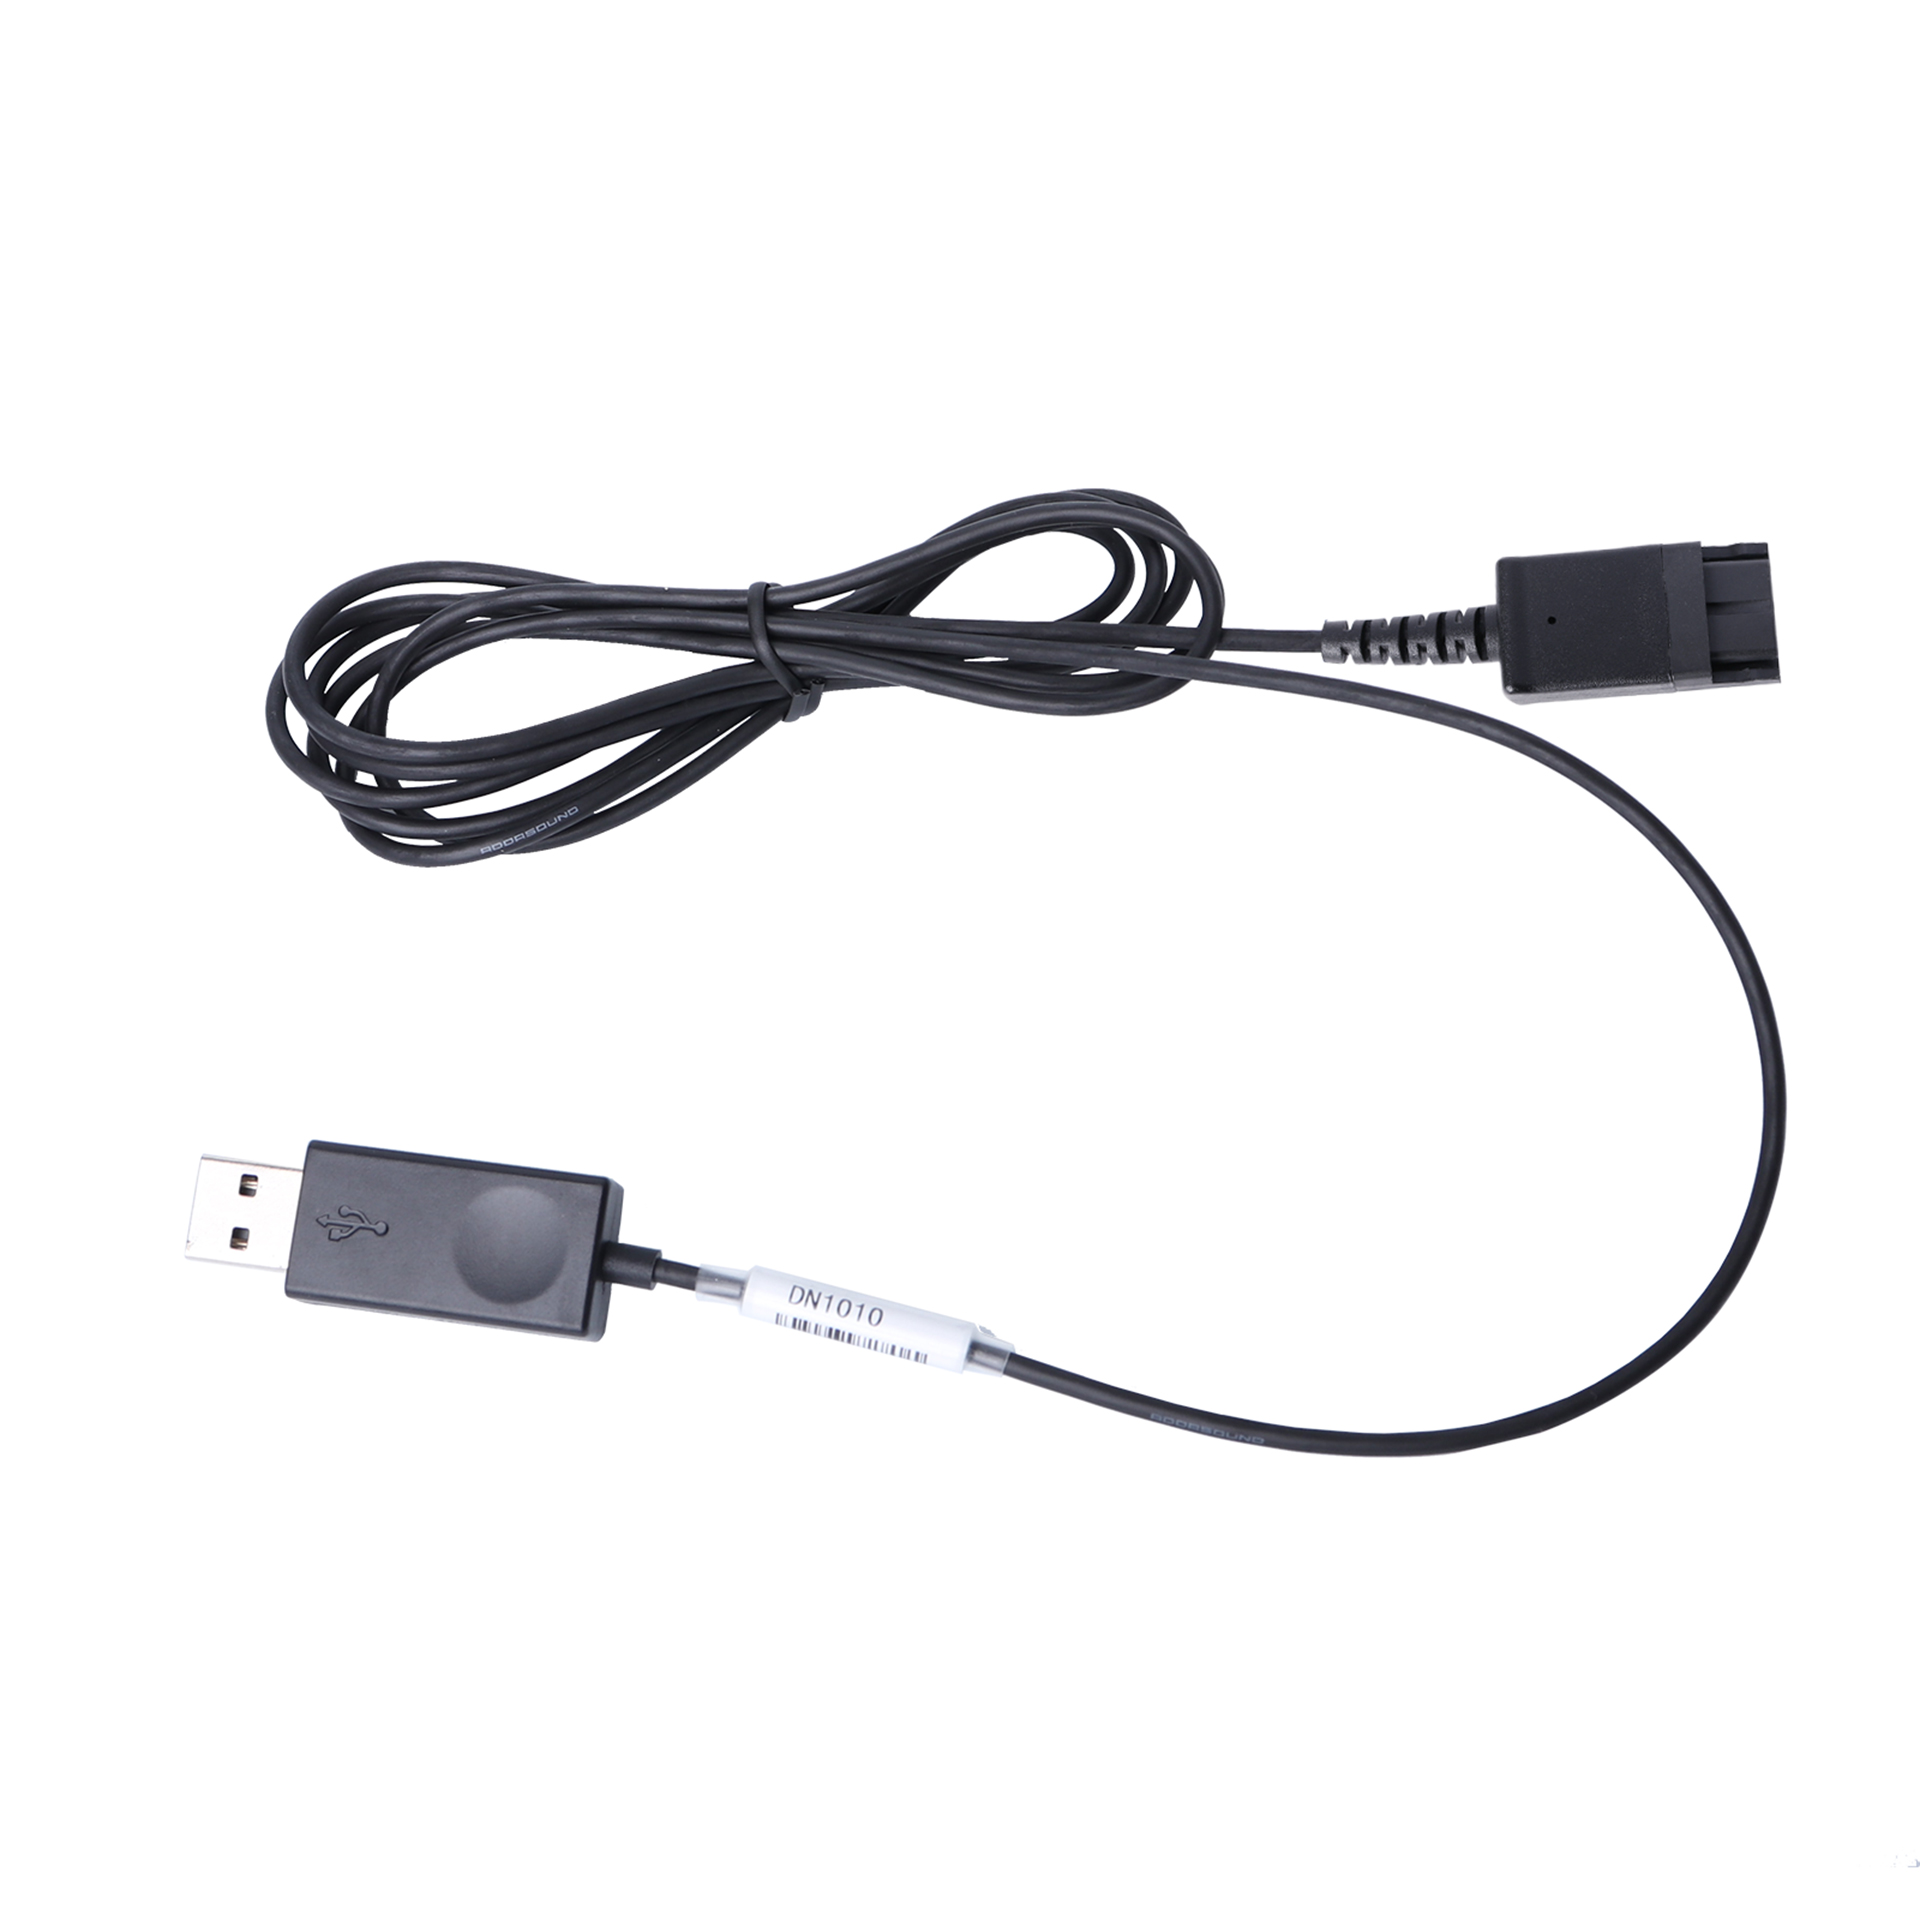 Addasound Anschlusskabel DN1010, GN-QD zu USB